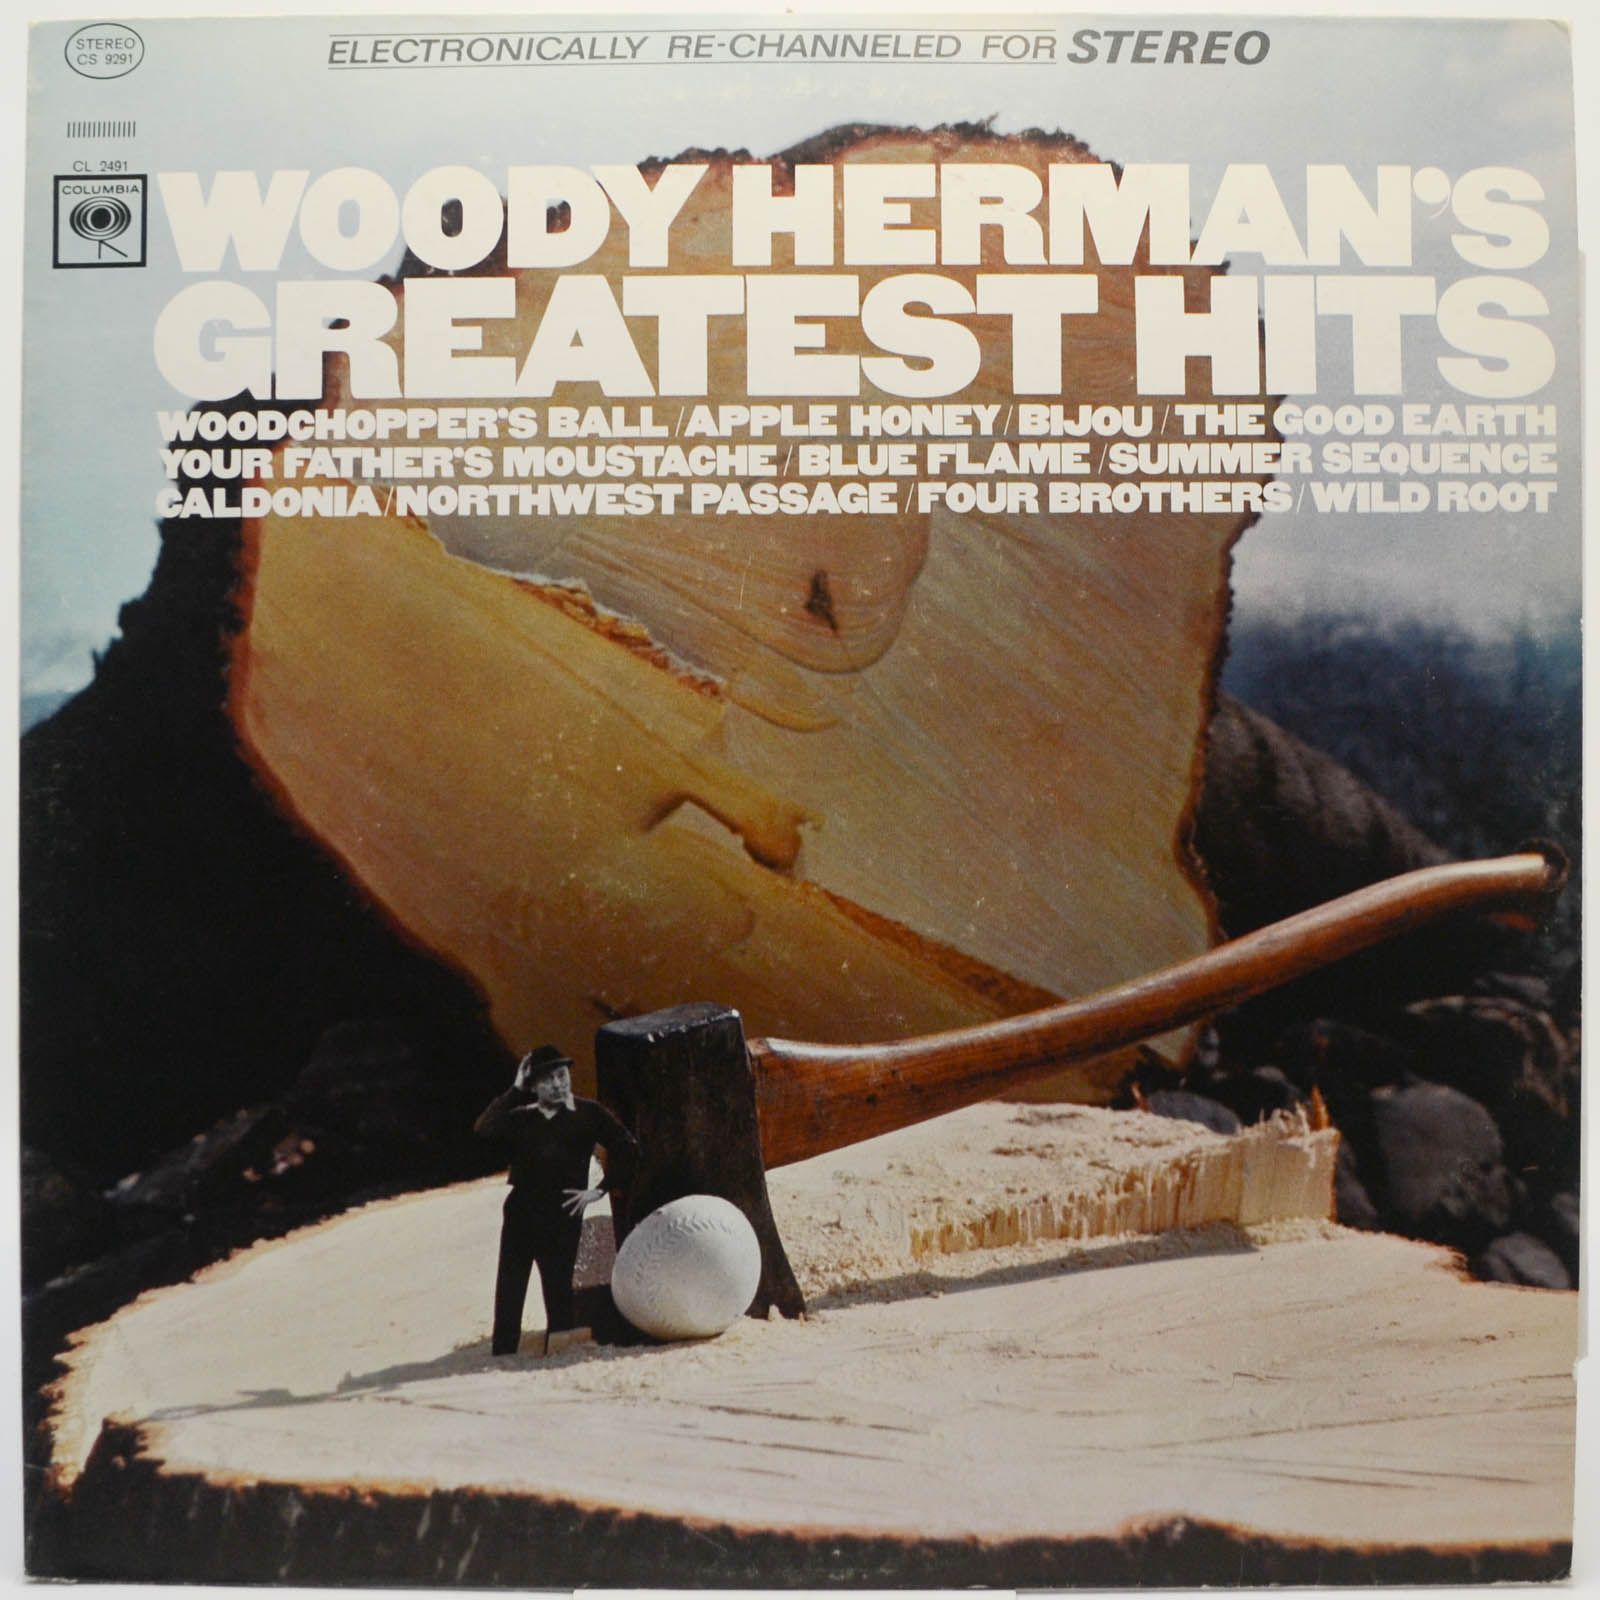 Woody Herman — Woody Herman's Greatest Hits (USA), 1966